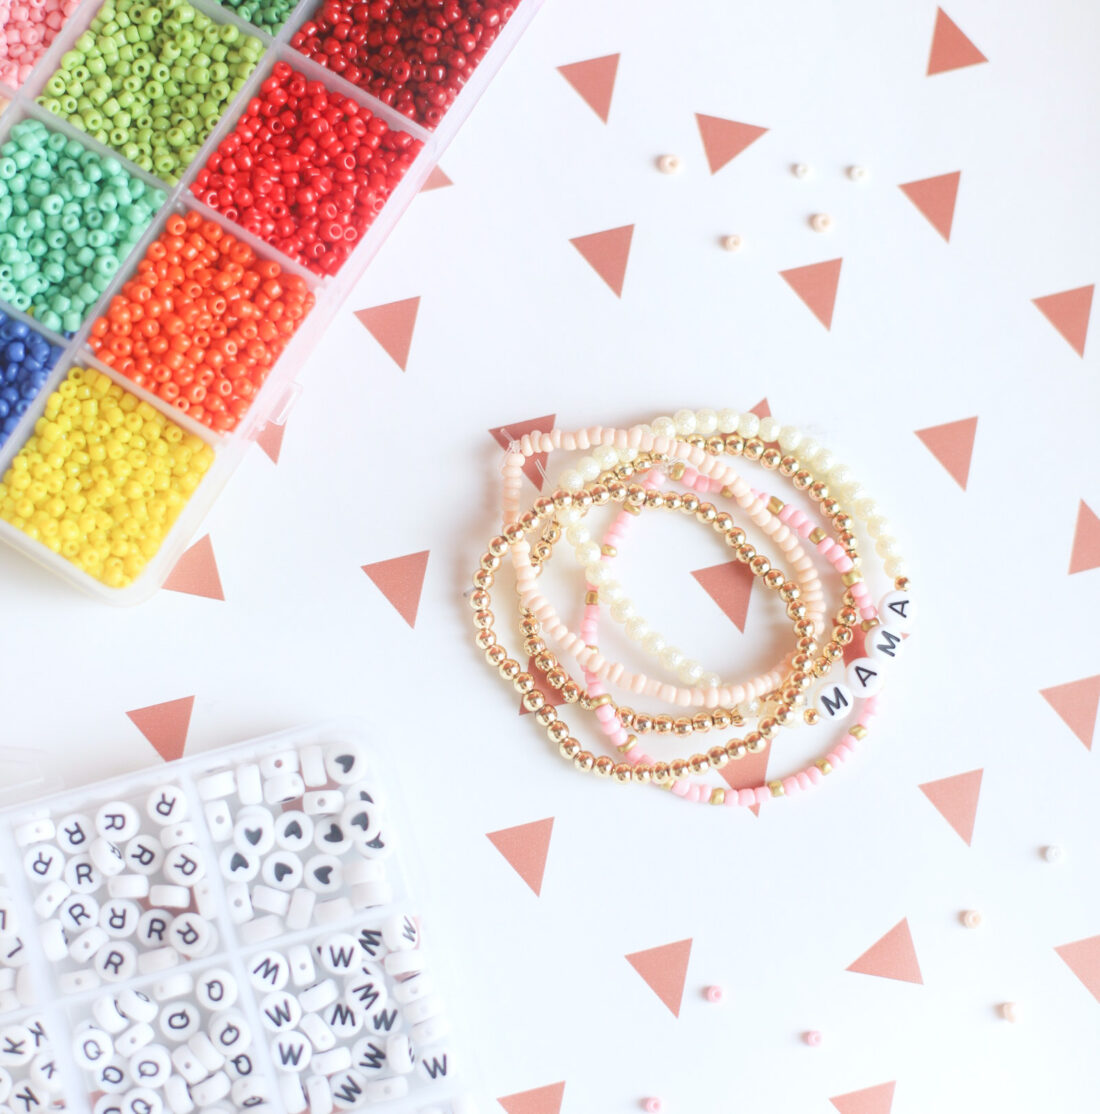 12 Simple Handmade Holiday Gift Ideas - Glitter, Inc.